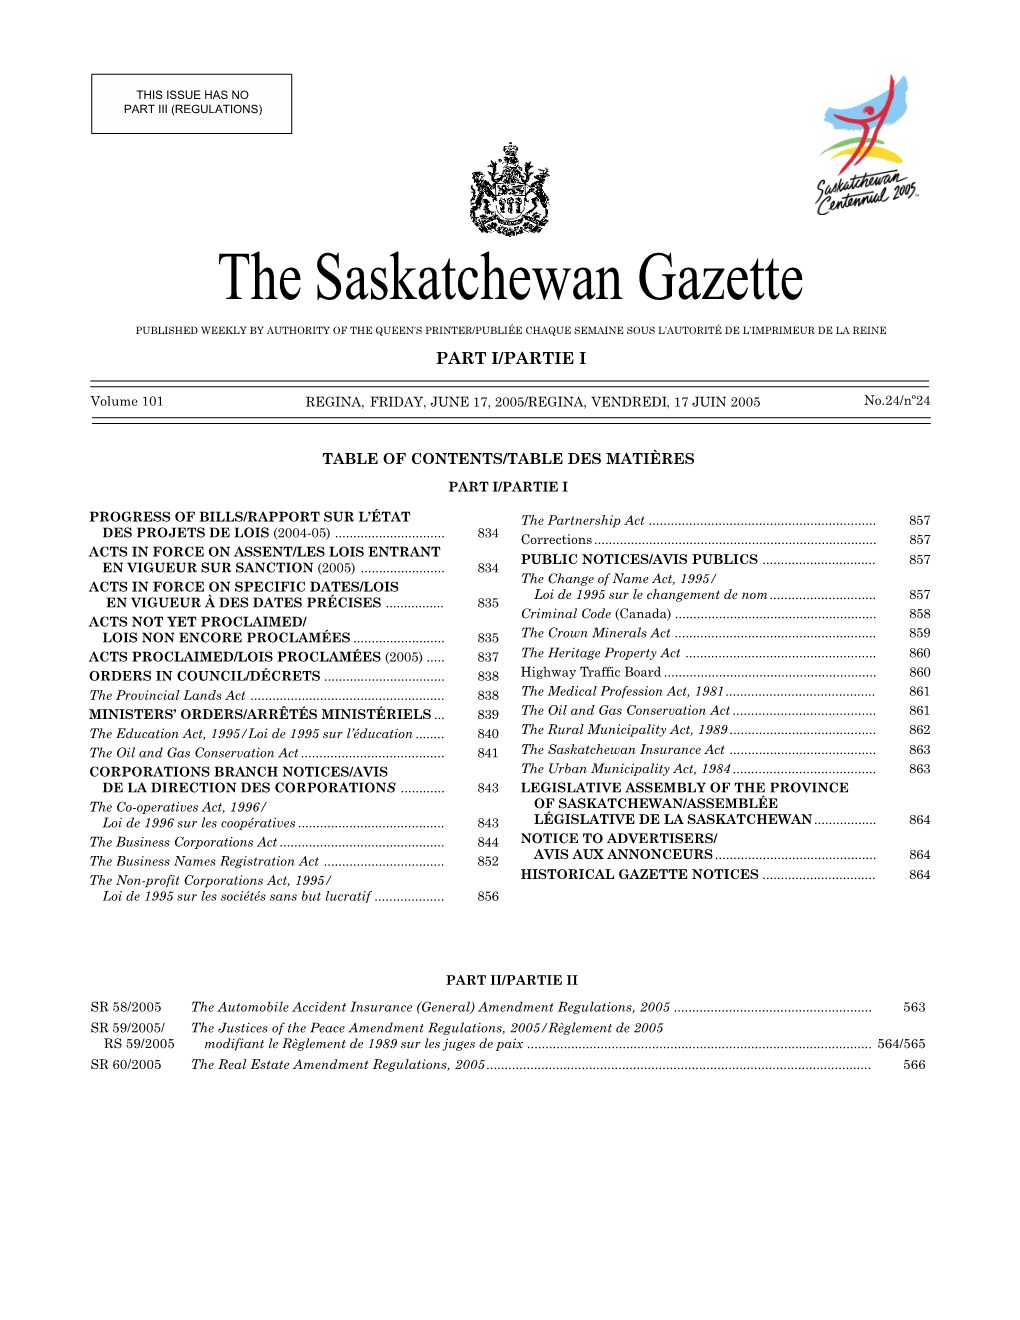 Saskatchewan-Electronic Interception Report for 2004